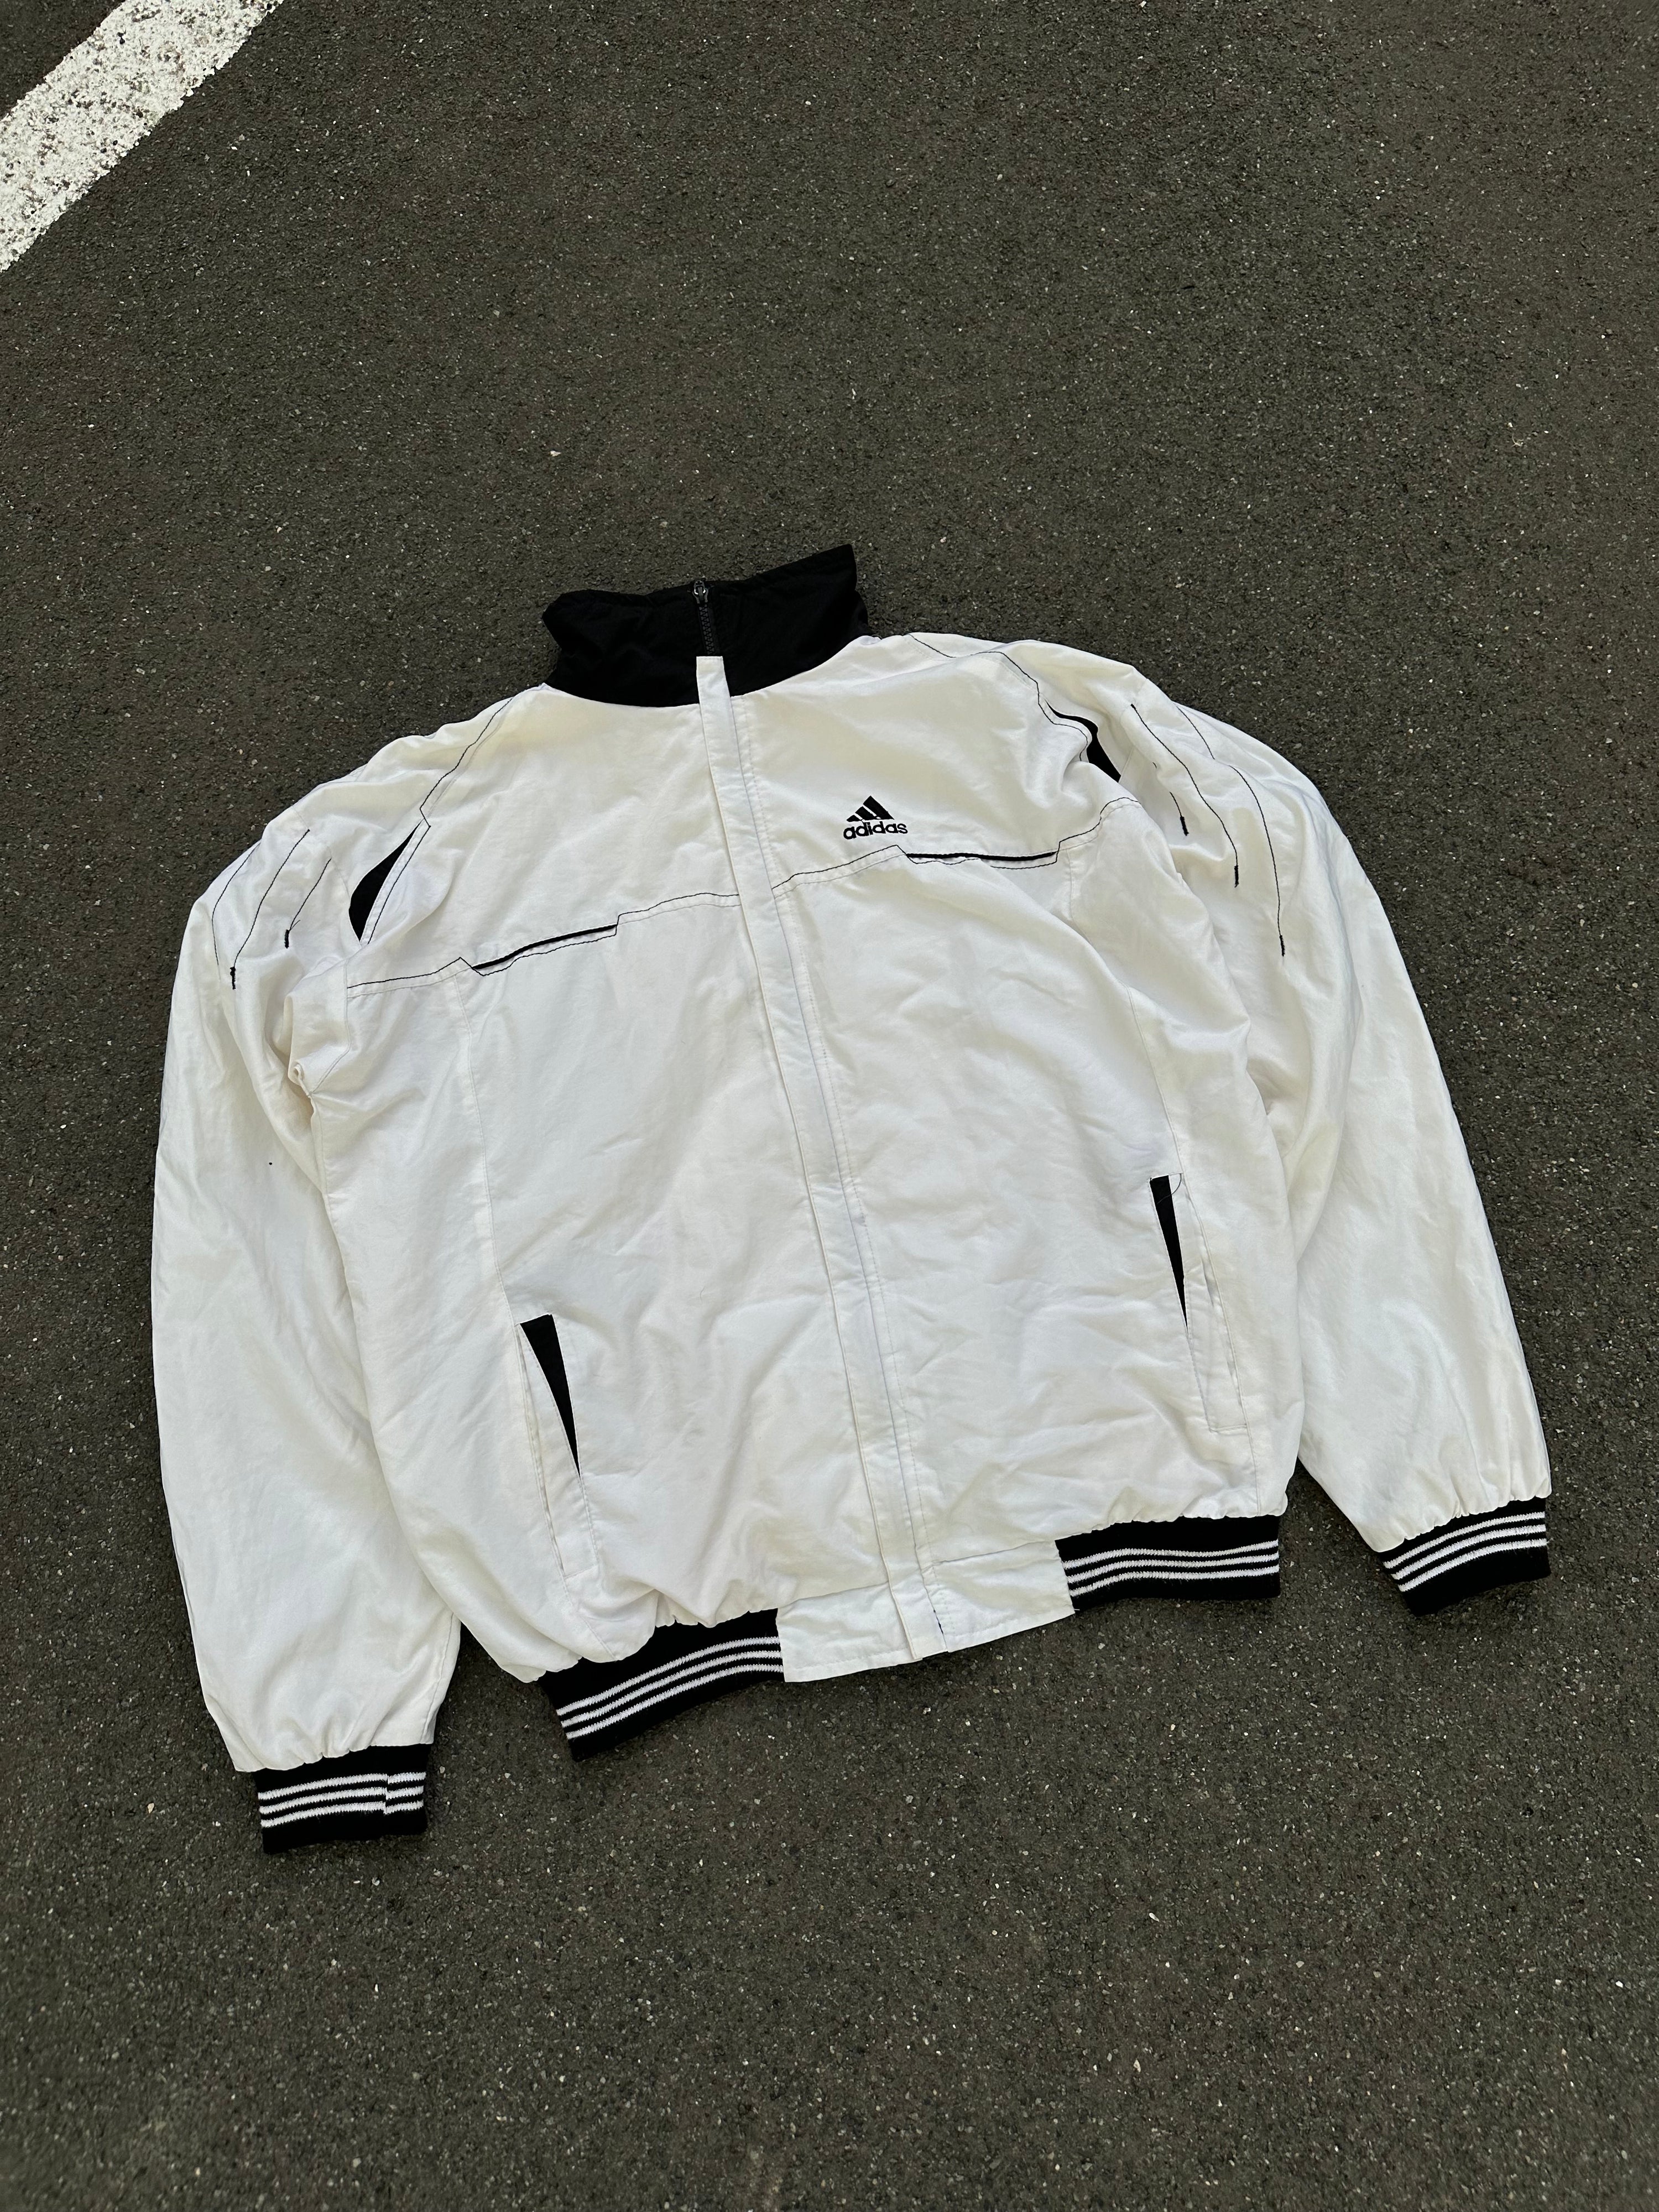 Early 2000s Adidas Light Track Jacket (XL)